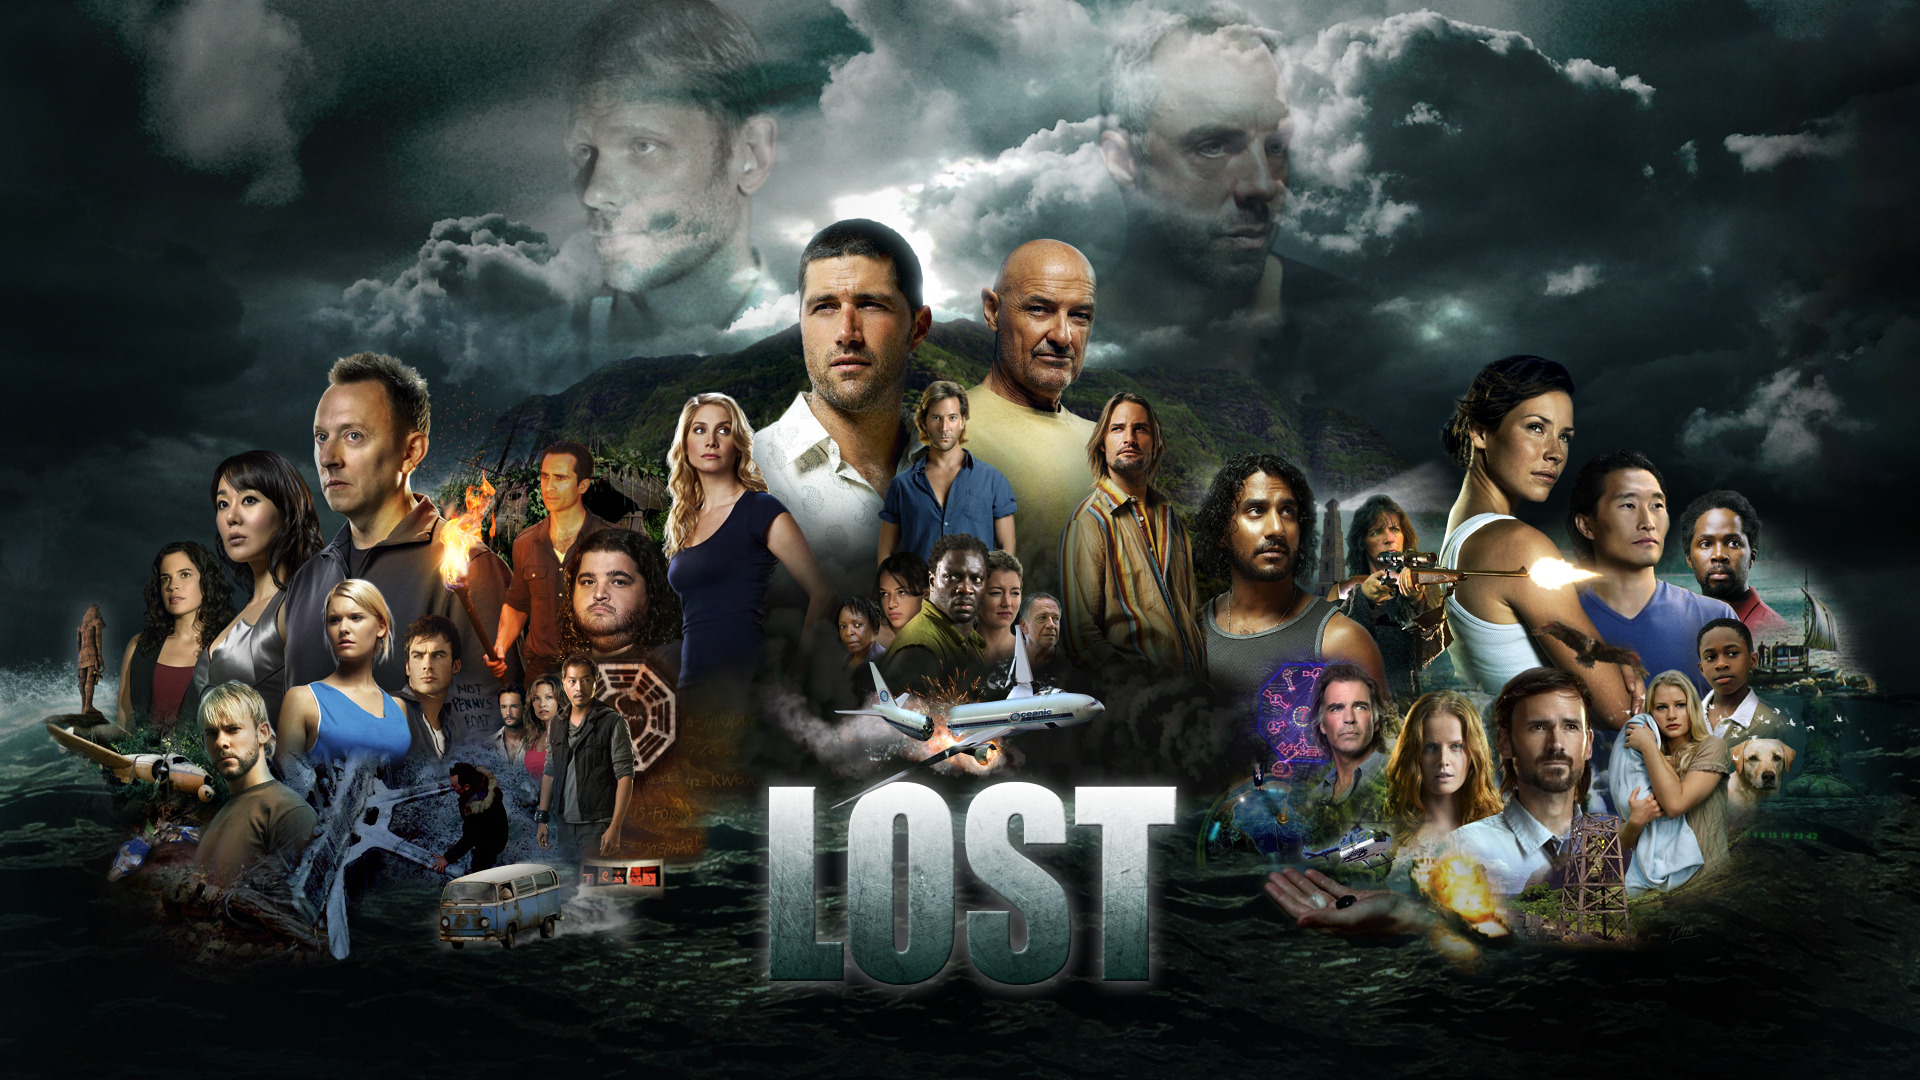 Lost (TV Series), television cast - desktop wallpaper